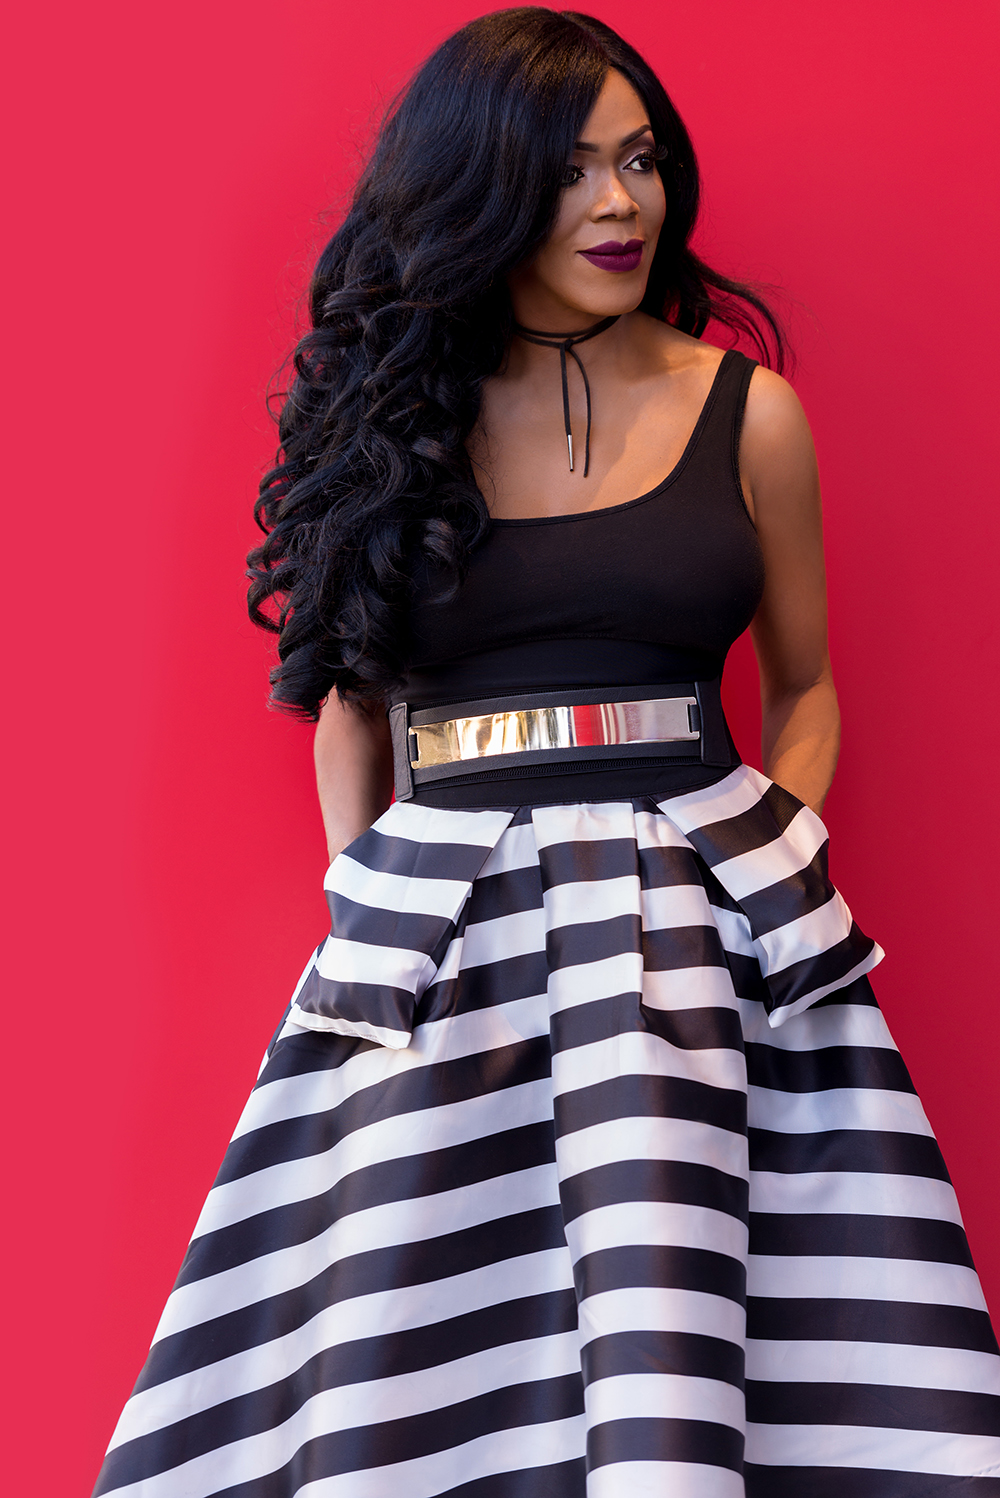 Bold Stripes Skirt + a Tank Top | Fashionably Idu